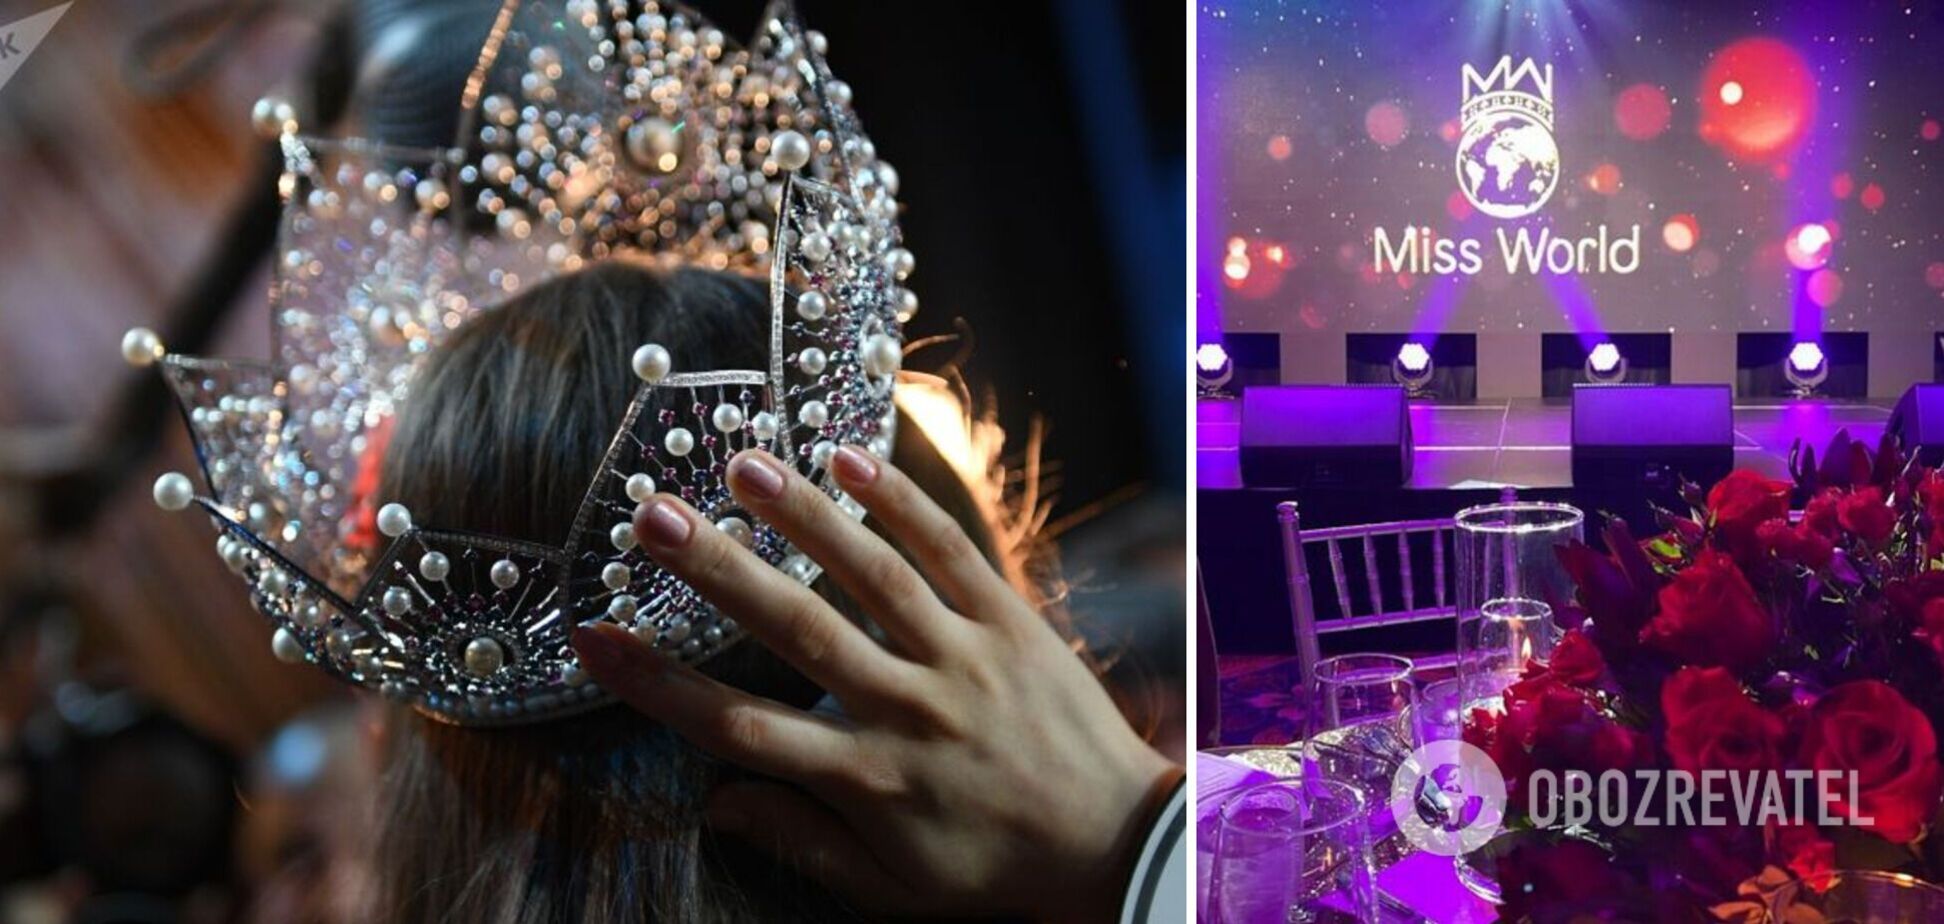 У семи участниц 'Мисс Мира' заподозрили коронавирус: их изолировали